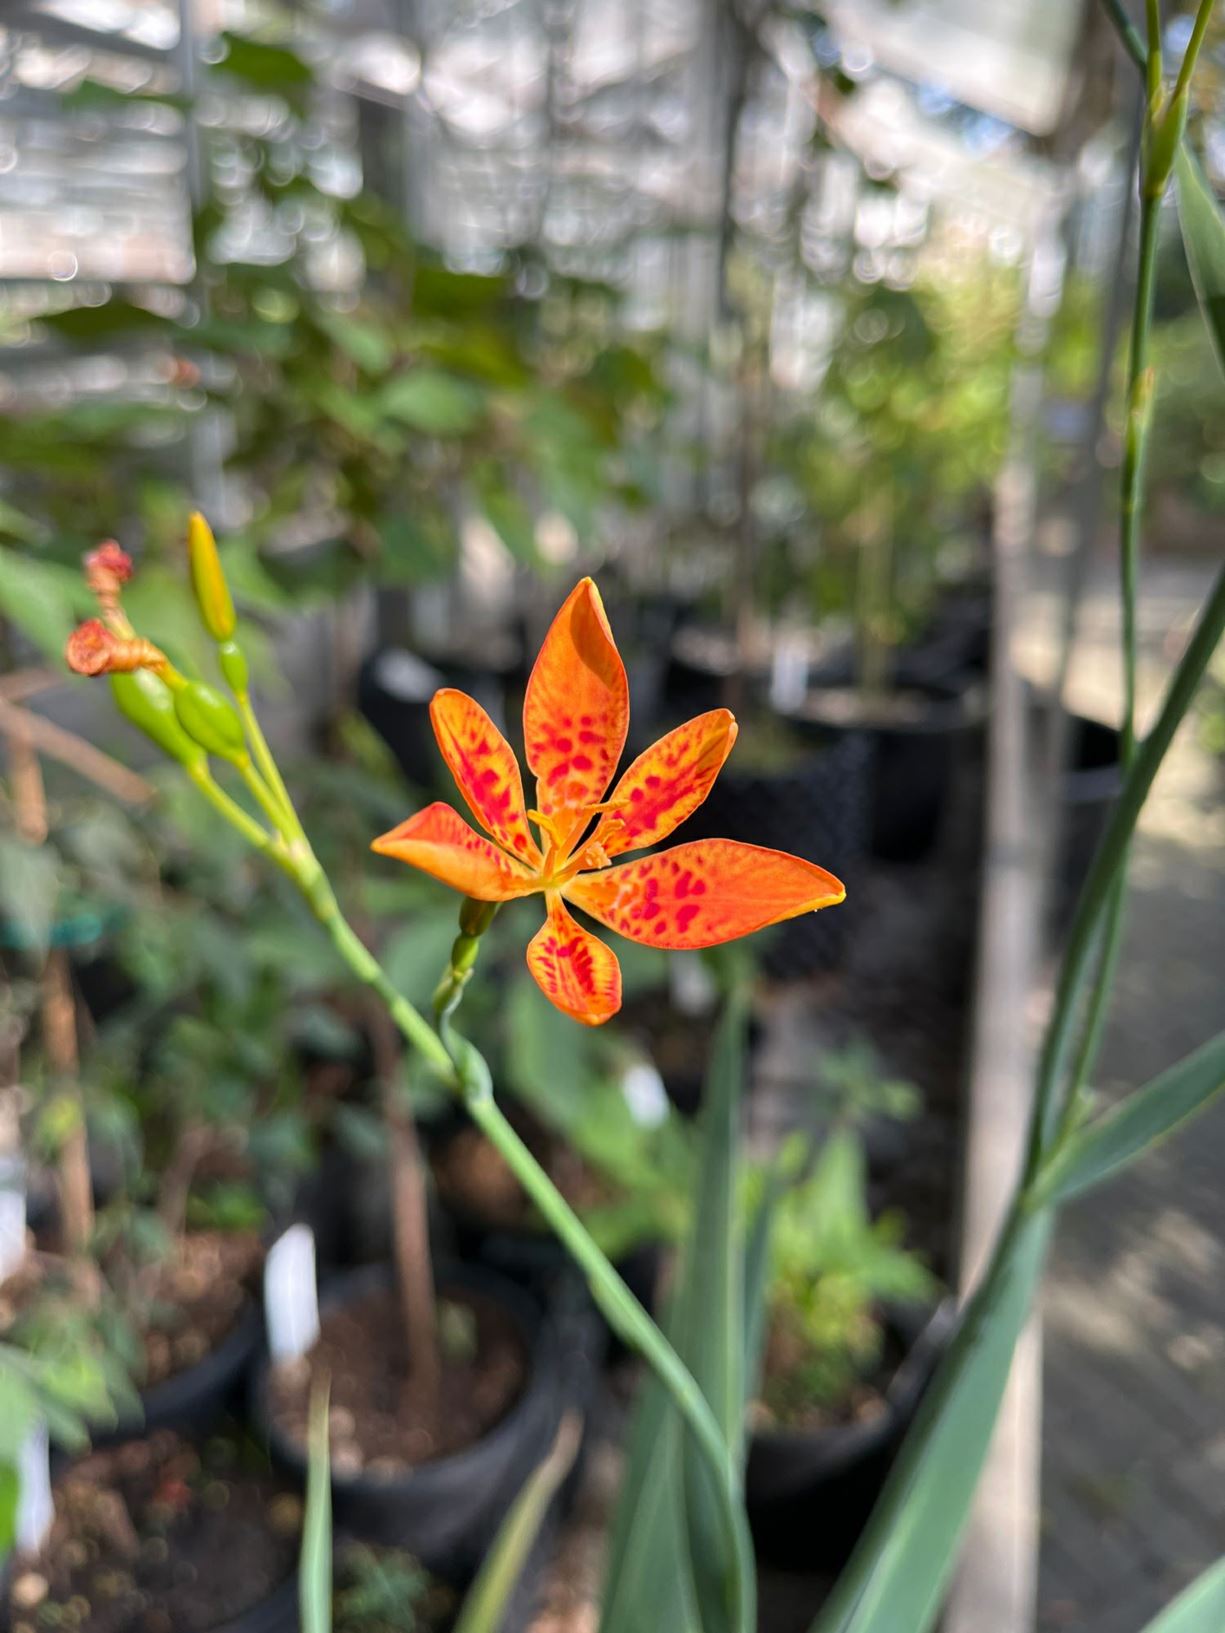 Iris domestica - Blackberry lily